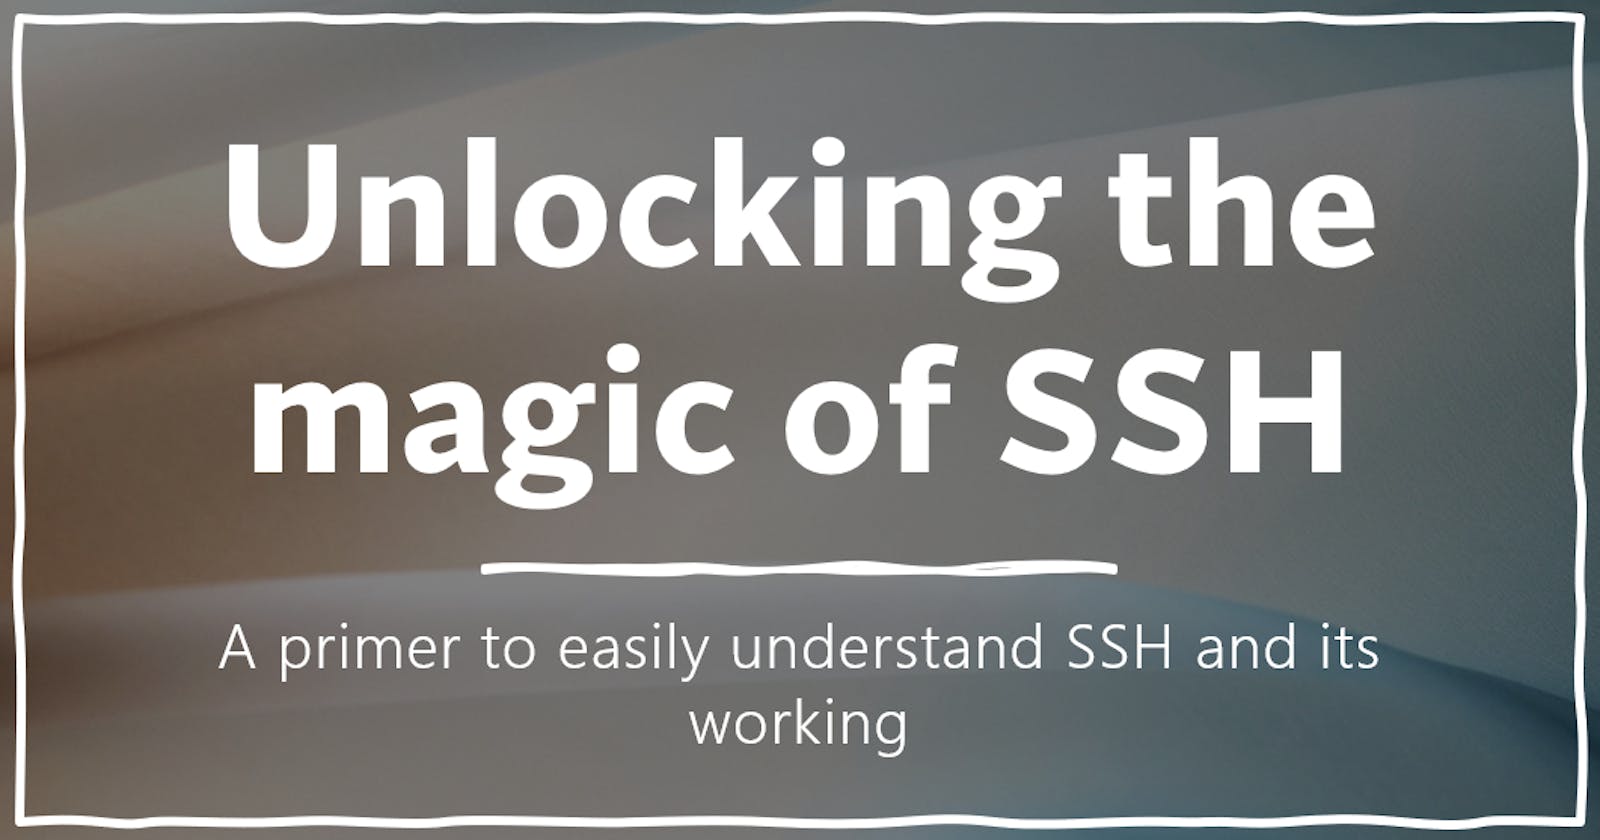 Unlocking the magic of SSH